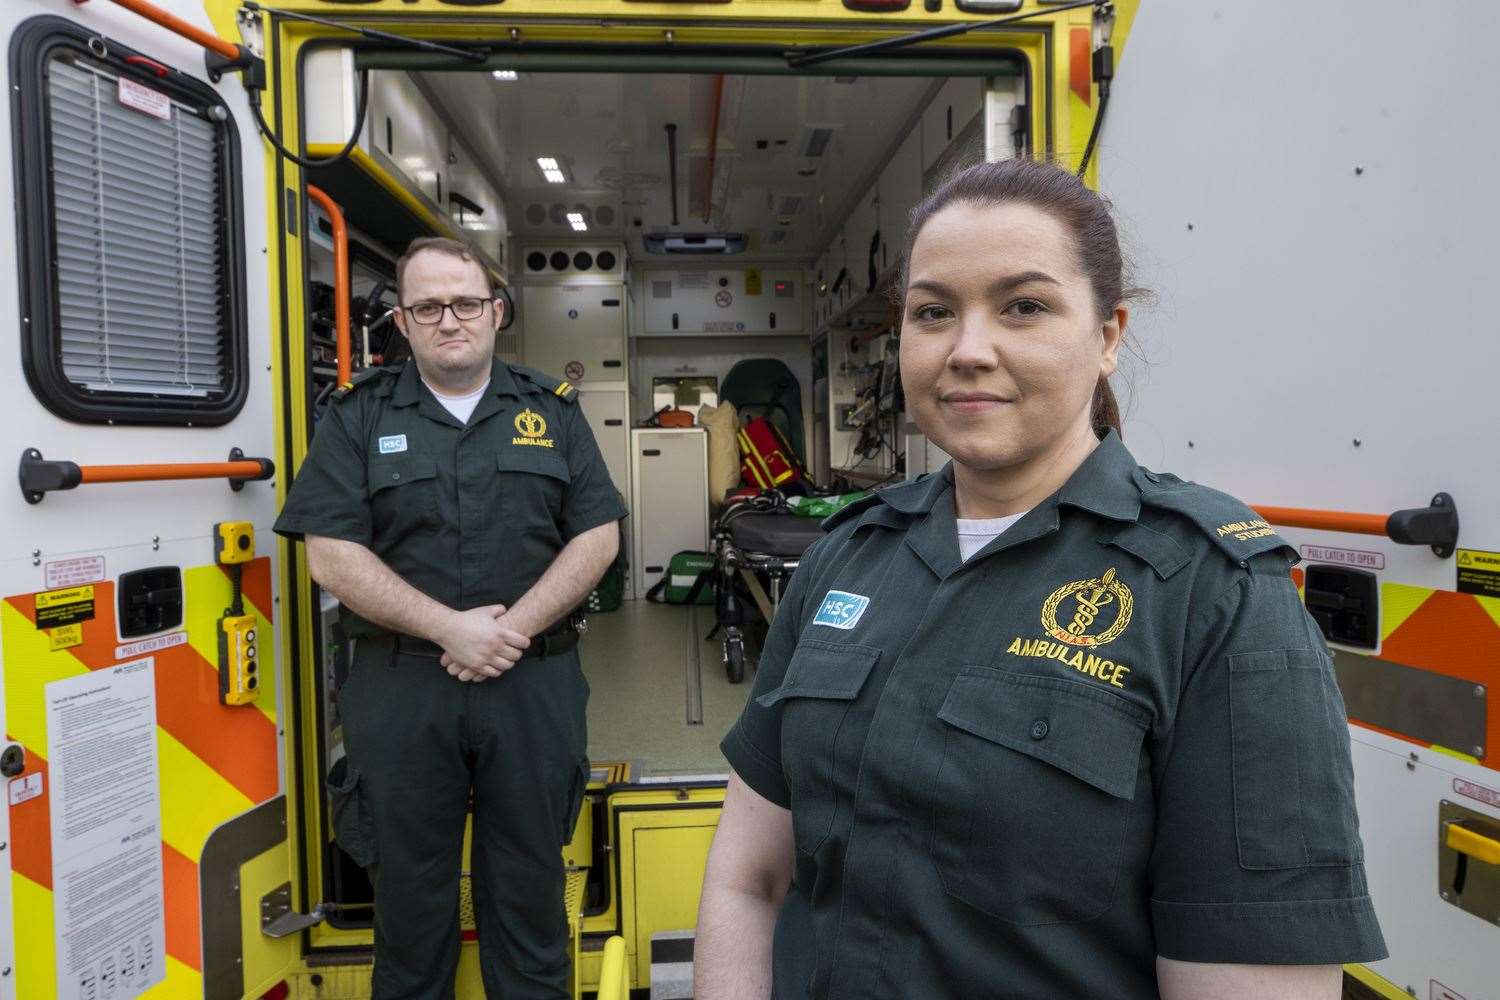 Paramedic Daniel McCollam and student emergency medical technician Ruth Corscadden (Liam McBurney/PA)